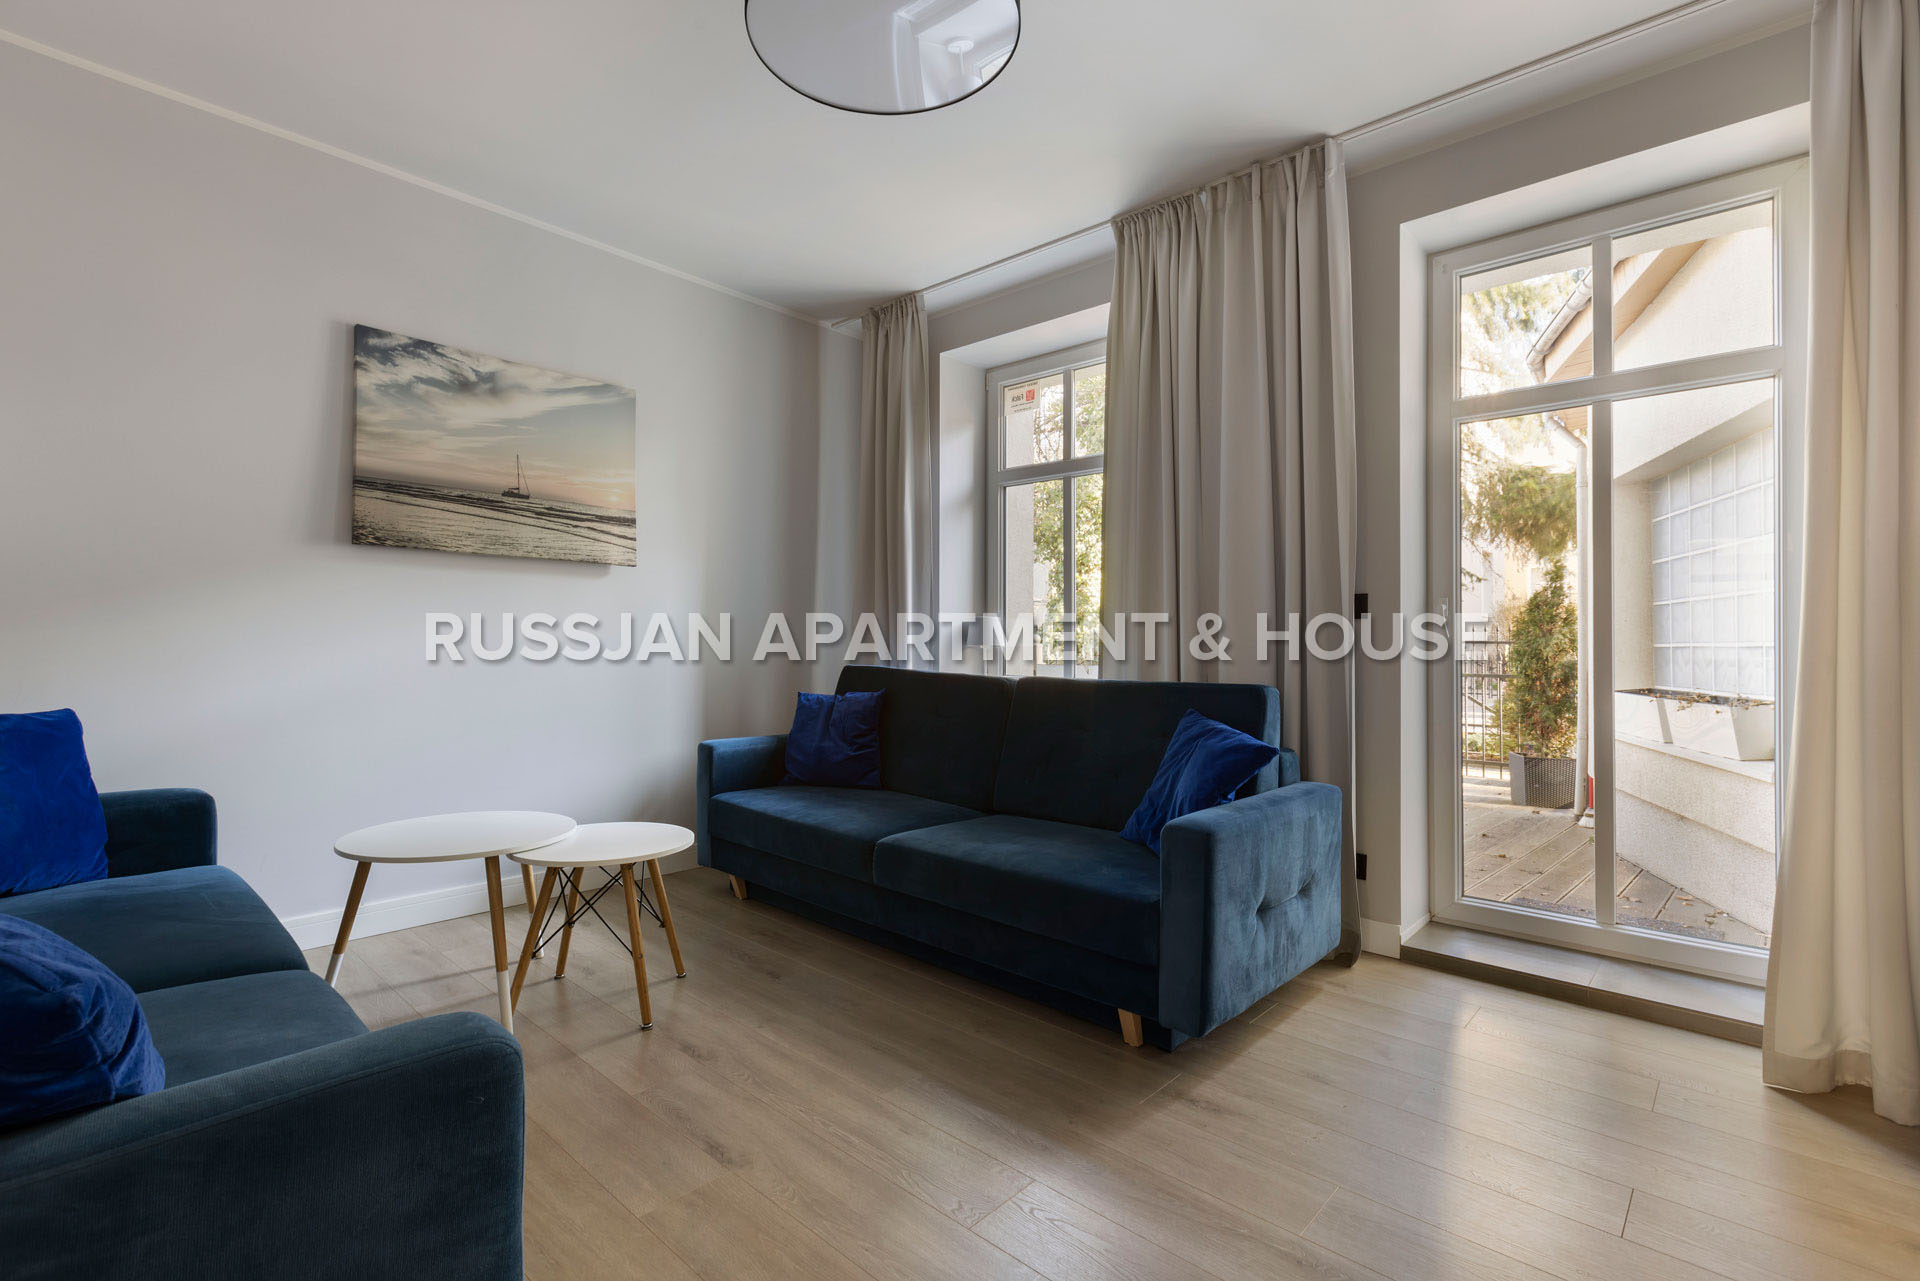  Ulica Mariana Mokwy | RUSSJAN Apartment & House